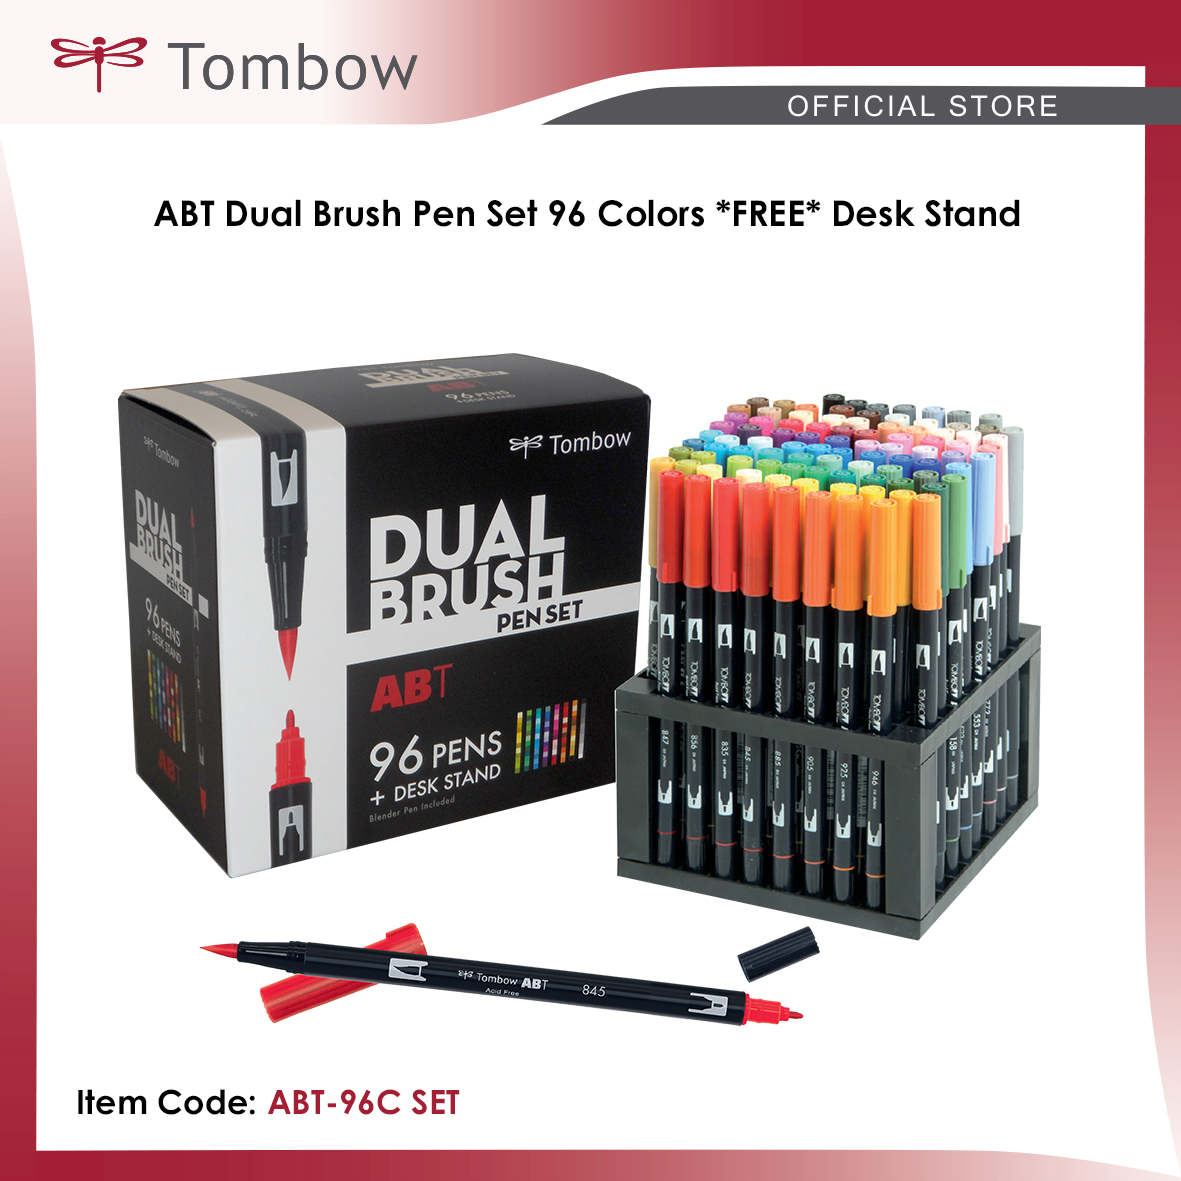 Tombow ABT Dual Brush Pen Set 96 Colors *FREE* Desk Stand